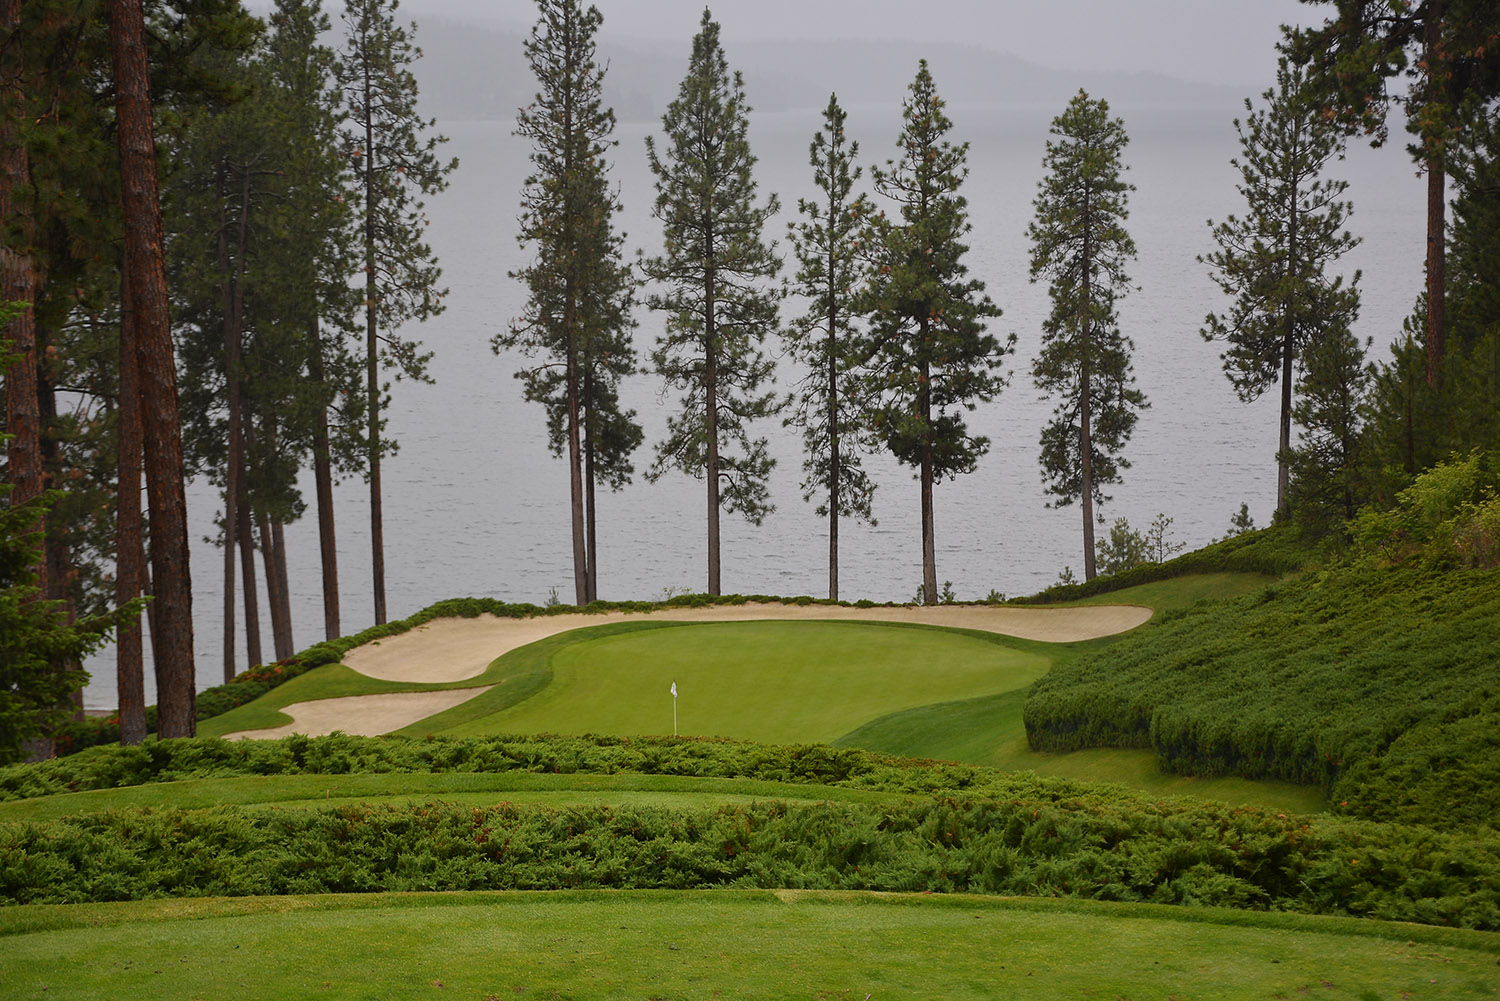 Coeur d’Alene Golf Resort: Picture Perfect (Even in the Rain)